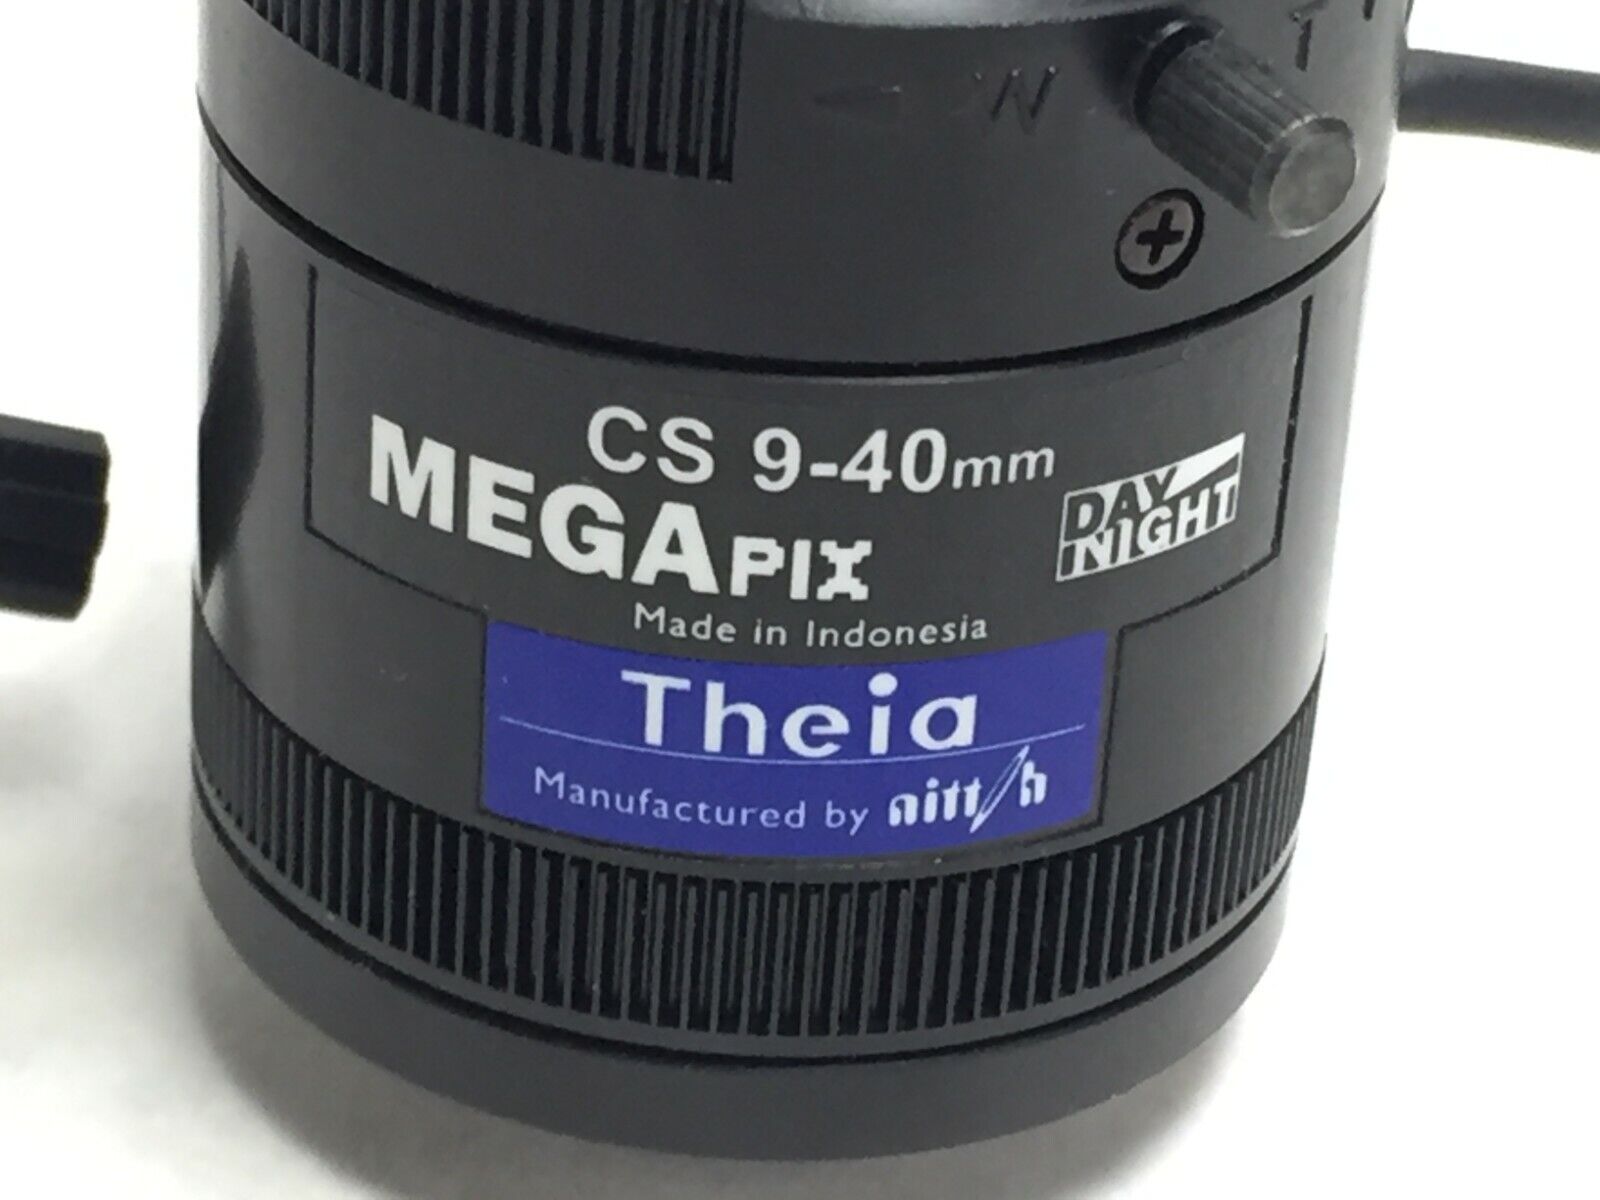 Theia CS 9-40mm MegaPIX  Day Night